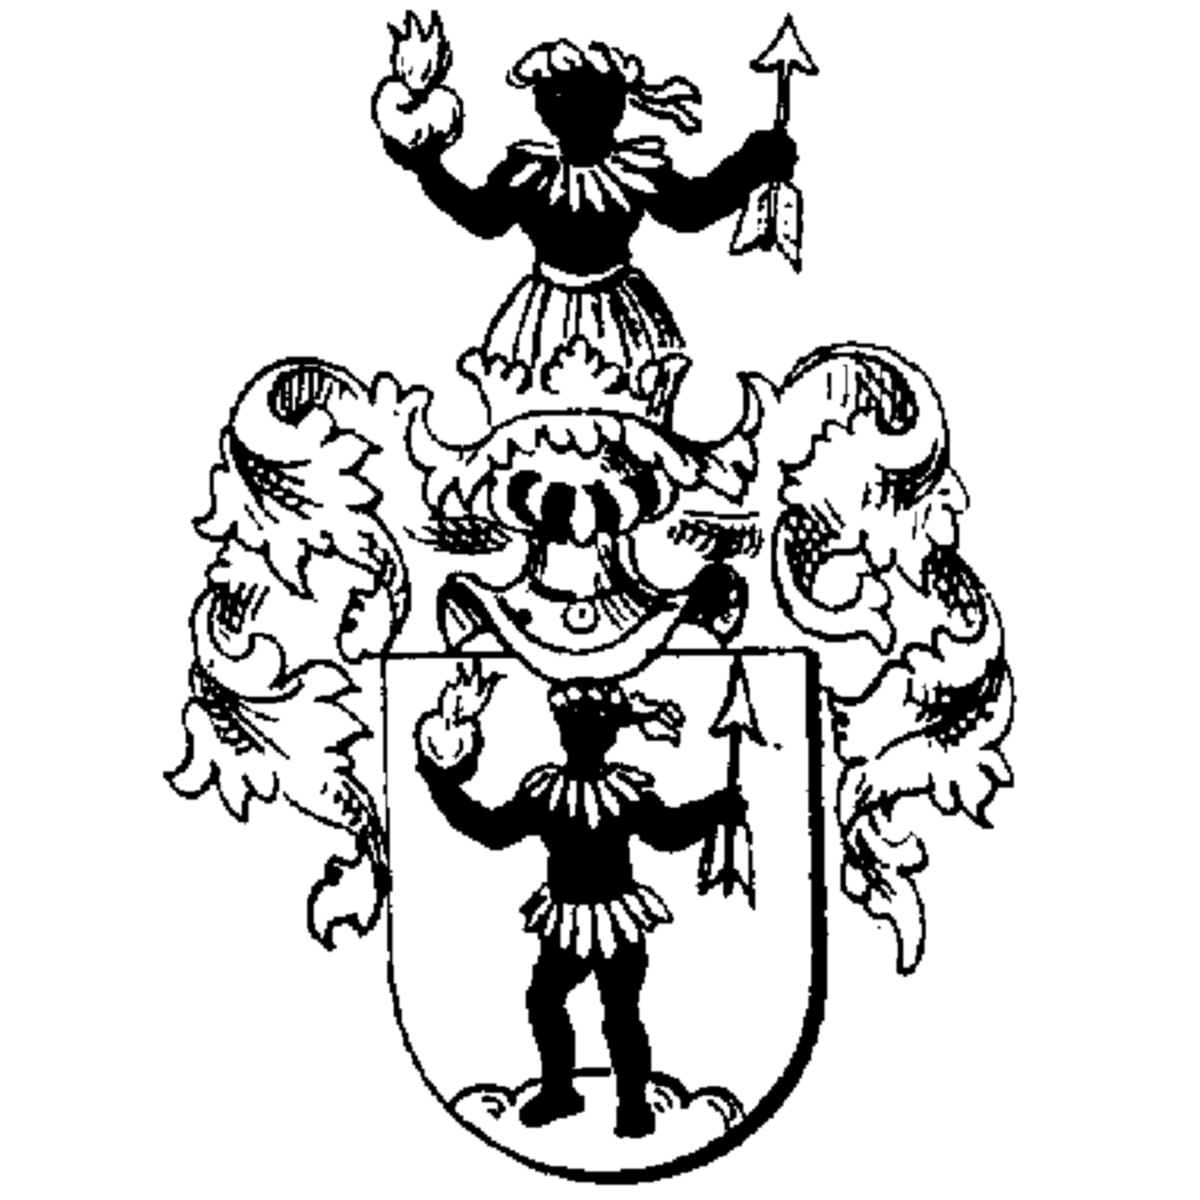 Wappen der Familie Zinngraf